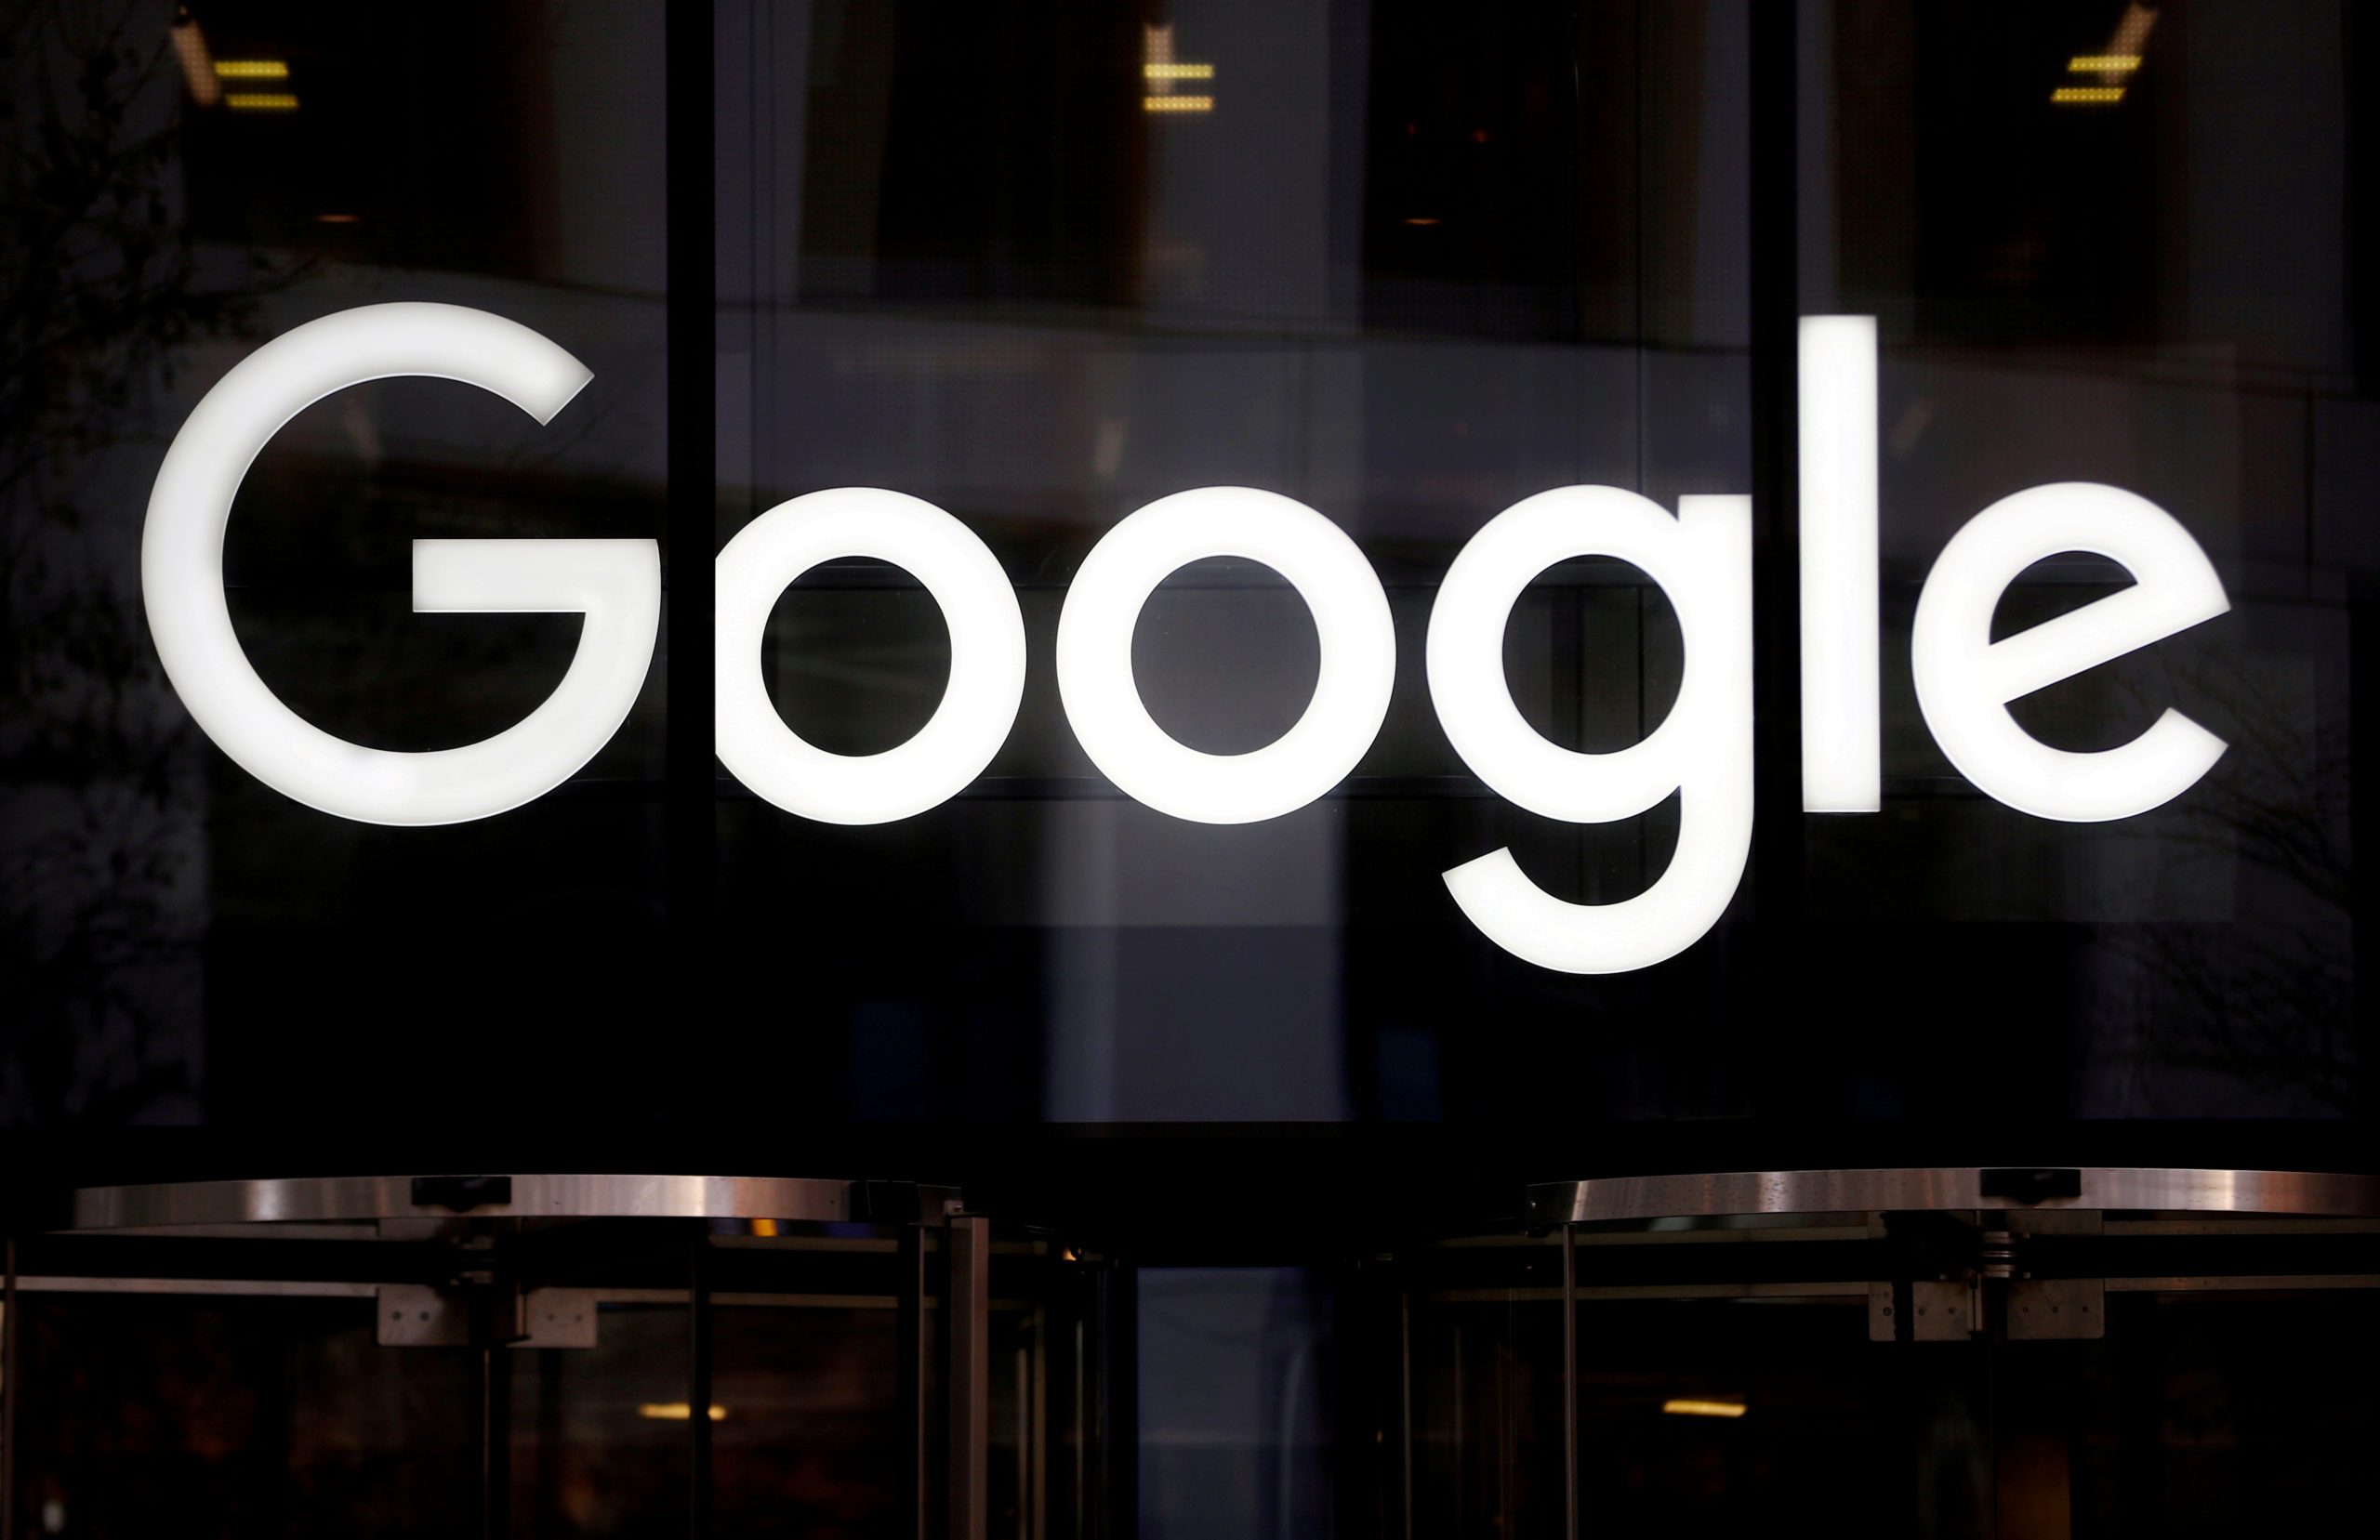 PwC Australia drags Google into tax leak scandal